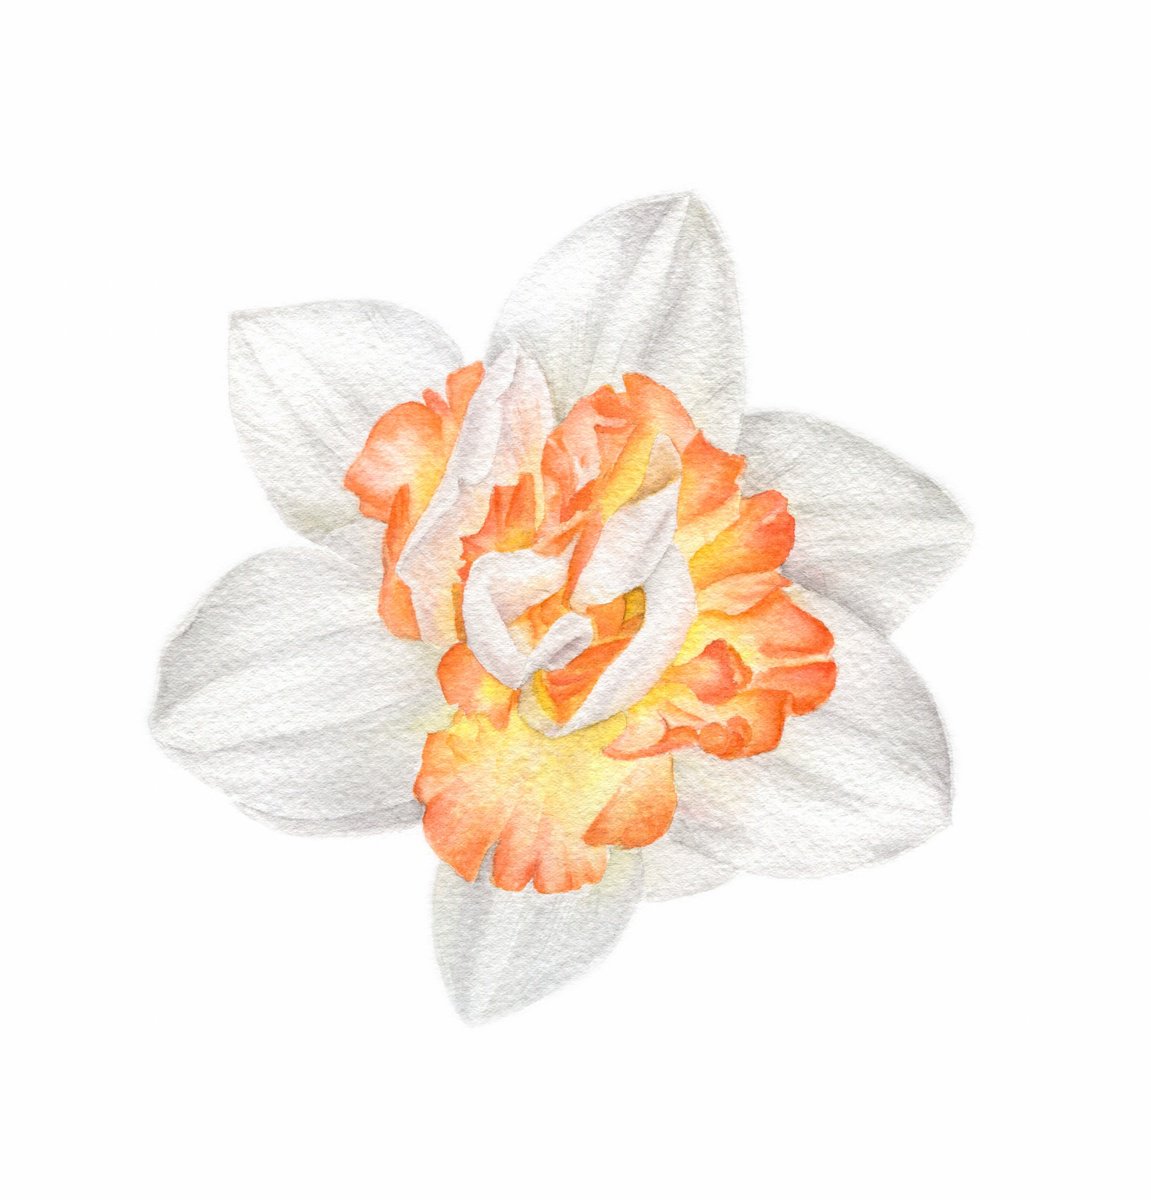 Narcissus Creamy White and Peach by Alona Hrinchuk